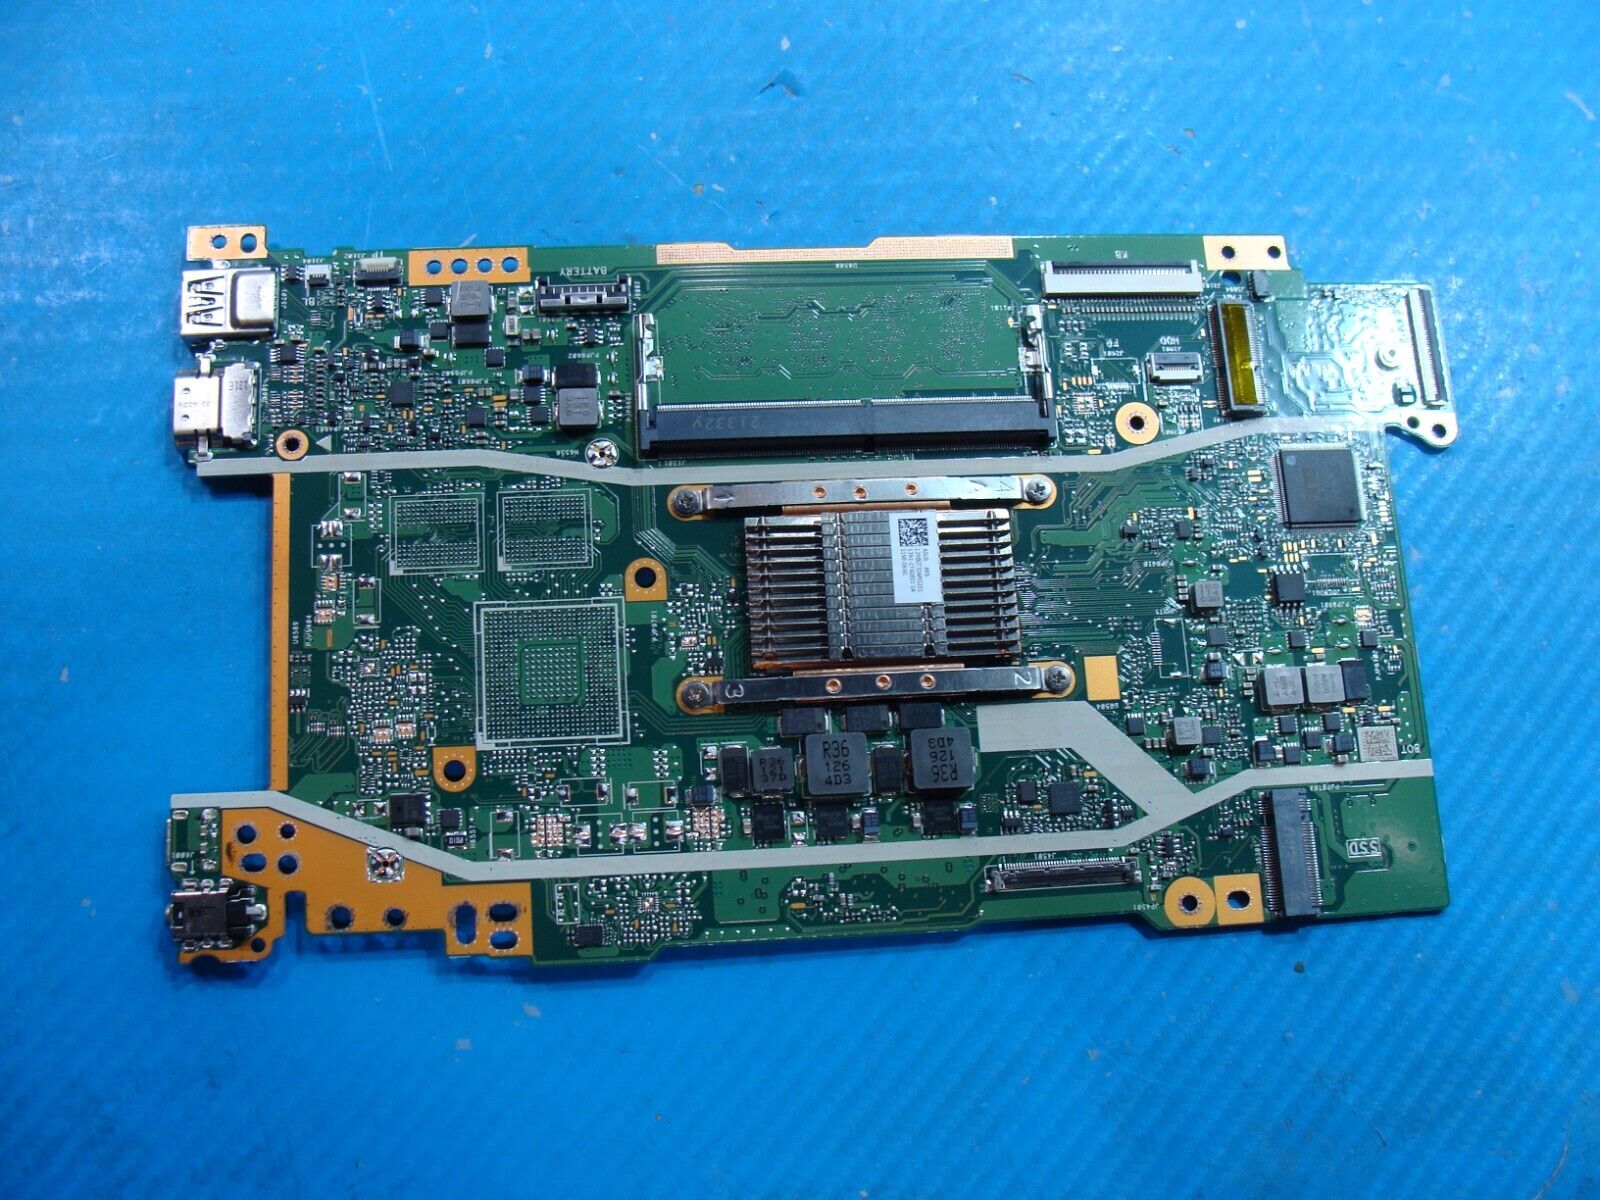 Asus VivoBook M415DA-DB21 14